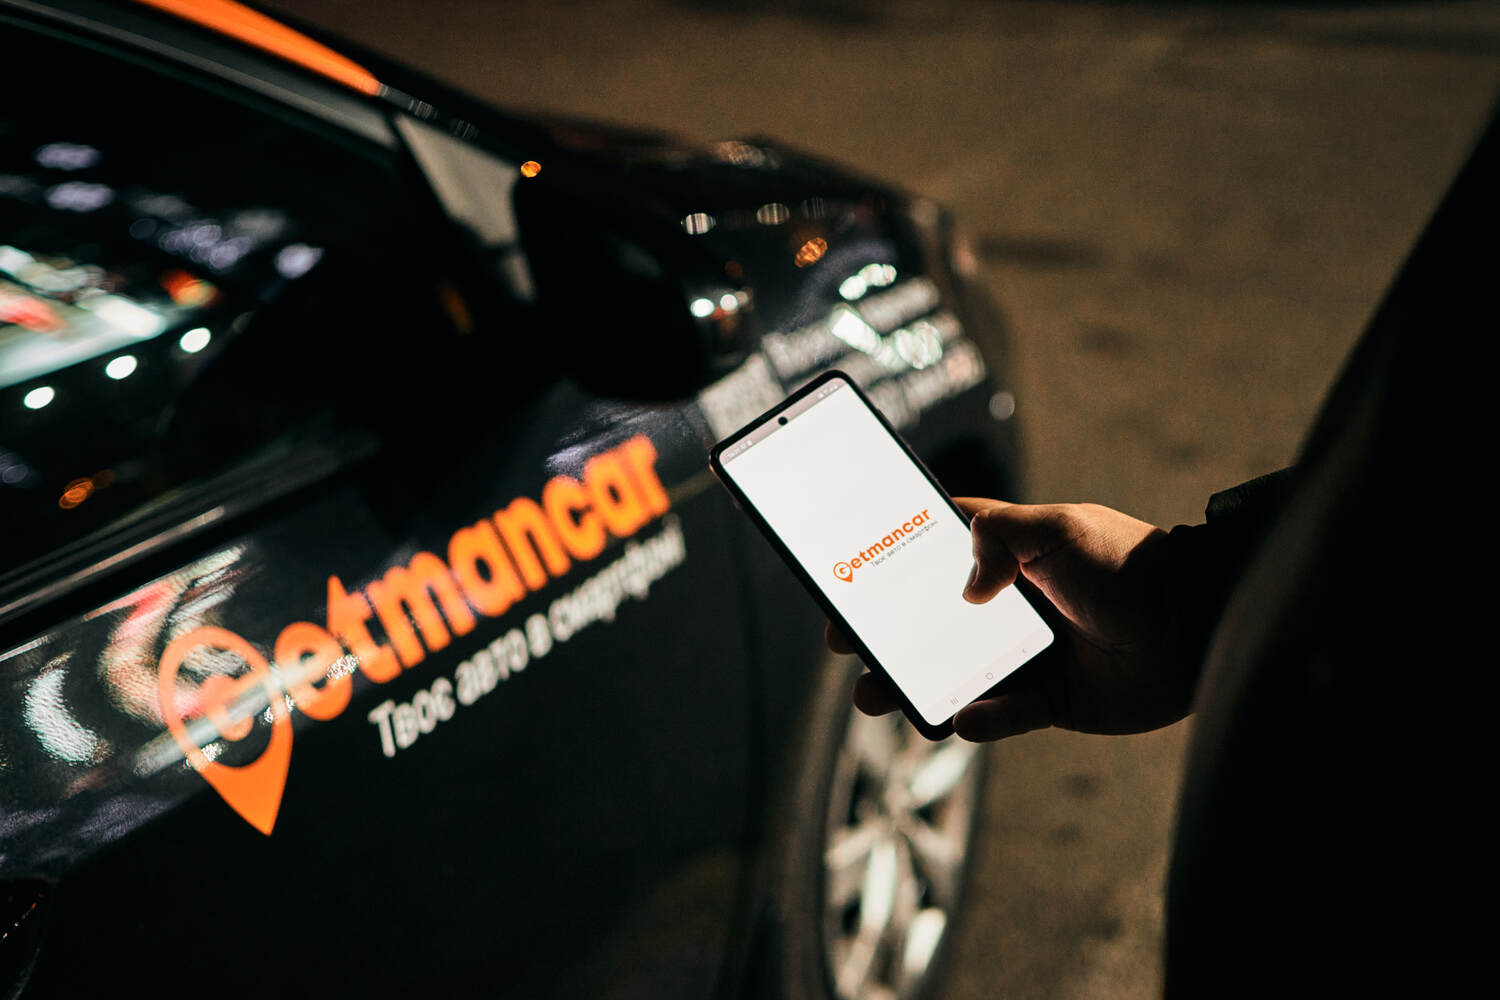 The Ukrainian car-sharing service Getmancar is launching in Moldova